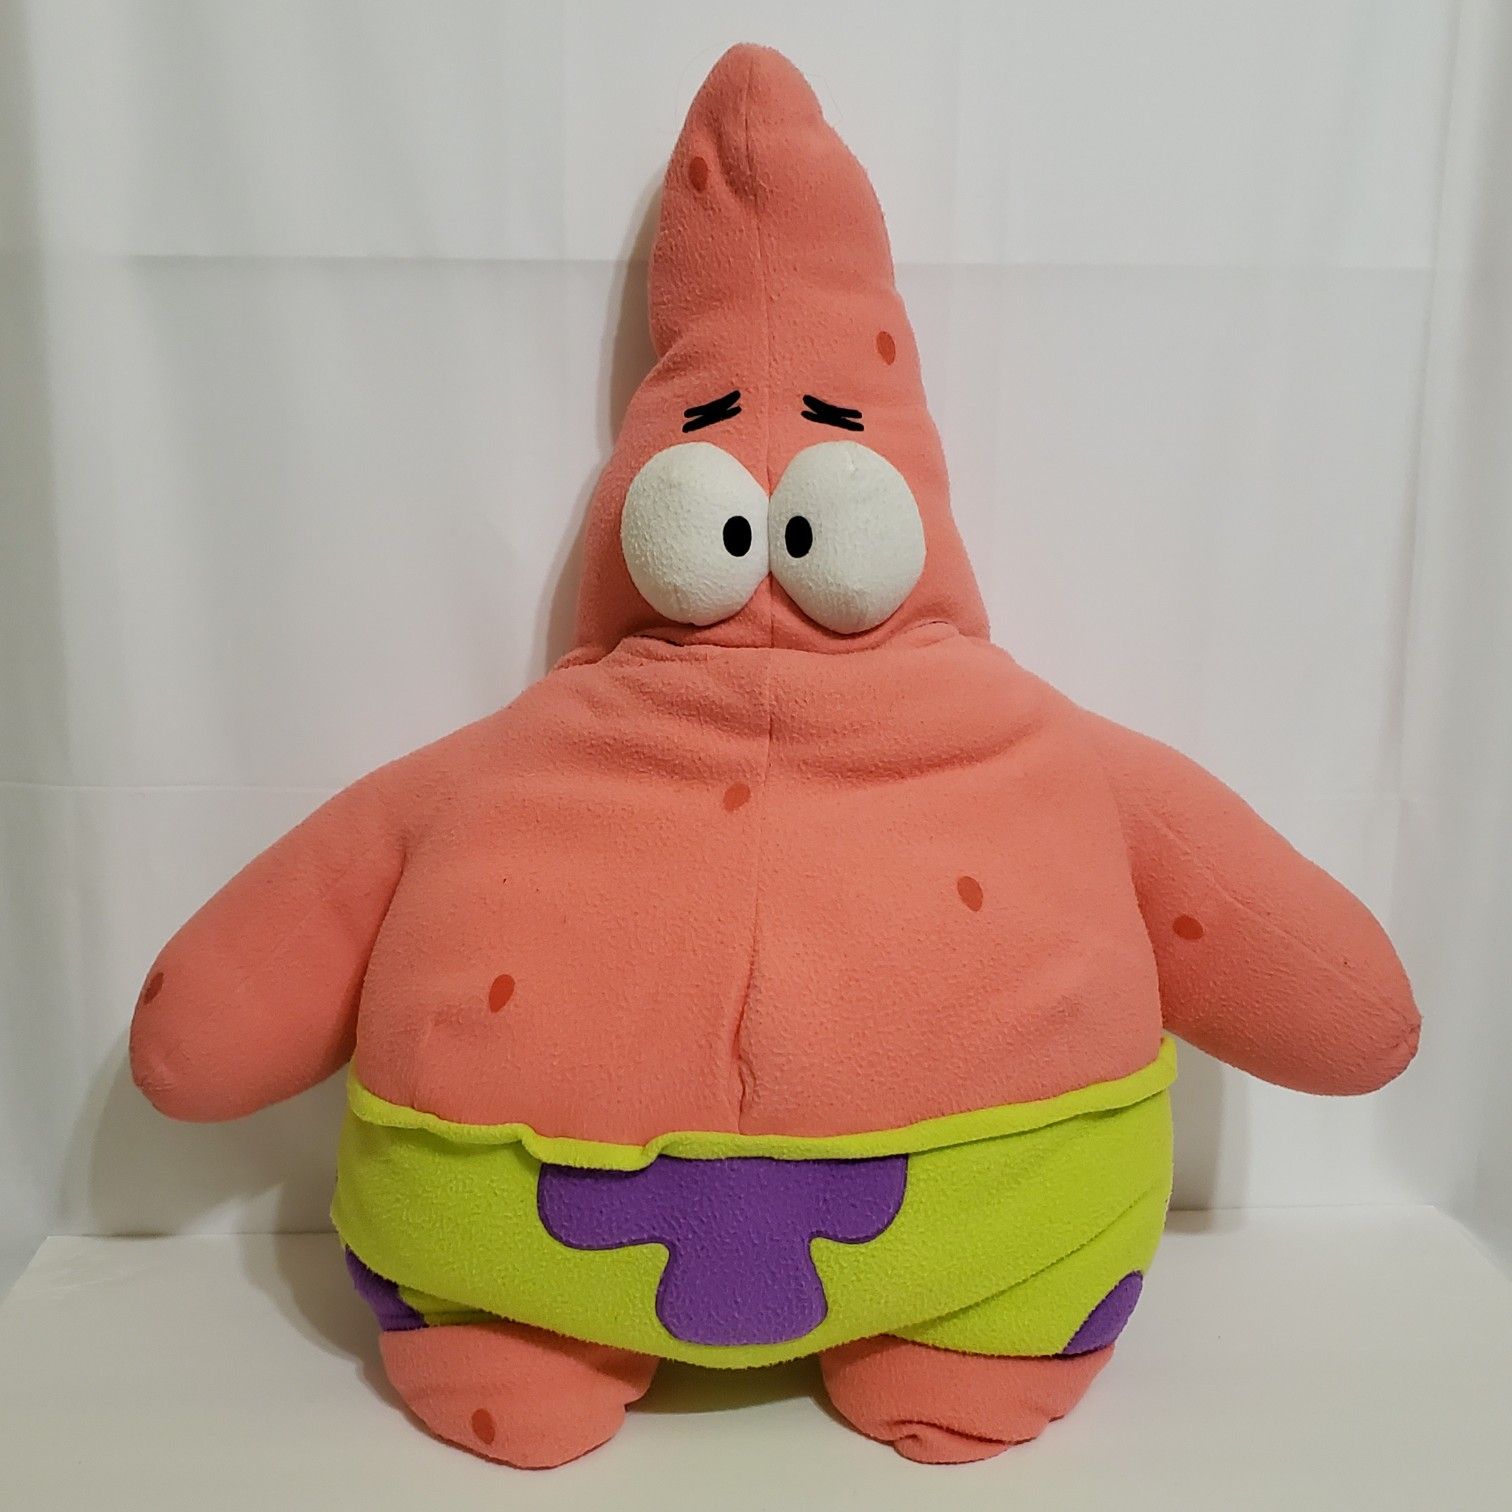 Jumbo Large 25" Spongebob Squarepants Plush Patrick Star Stuffed Animal/Pillow